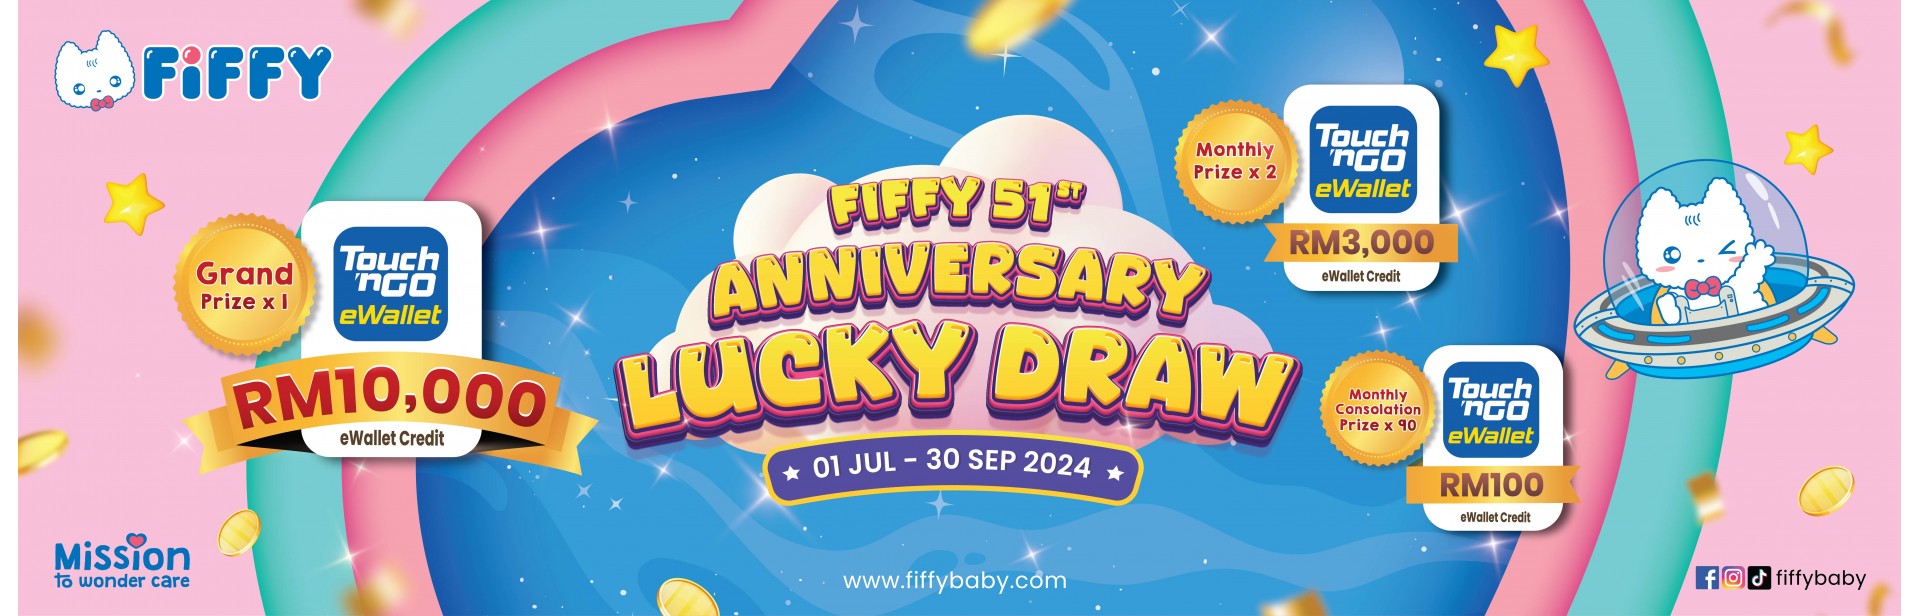 Fiffy 51st Anniversary Luck Draw